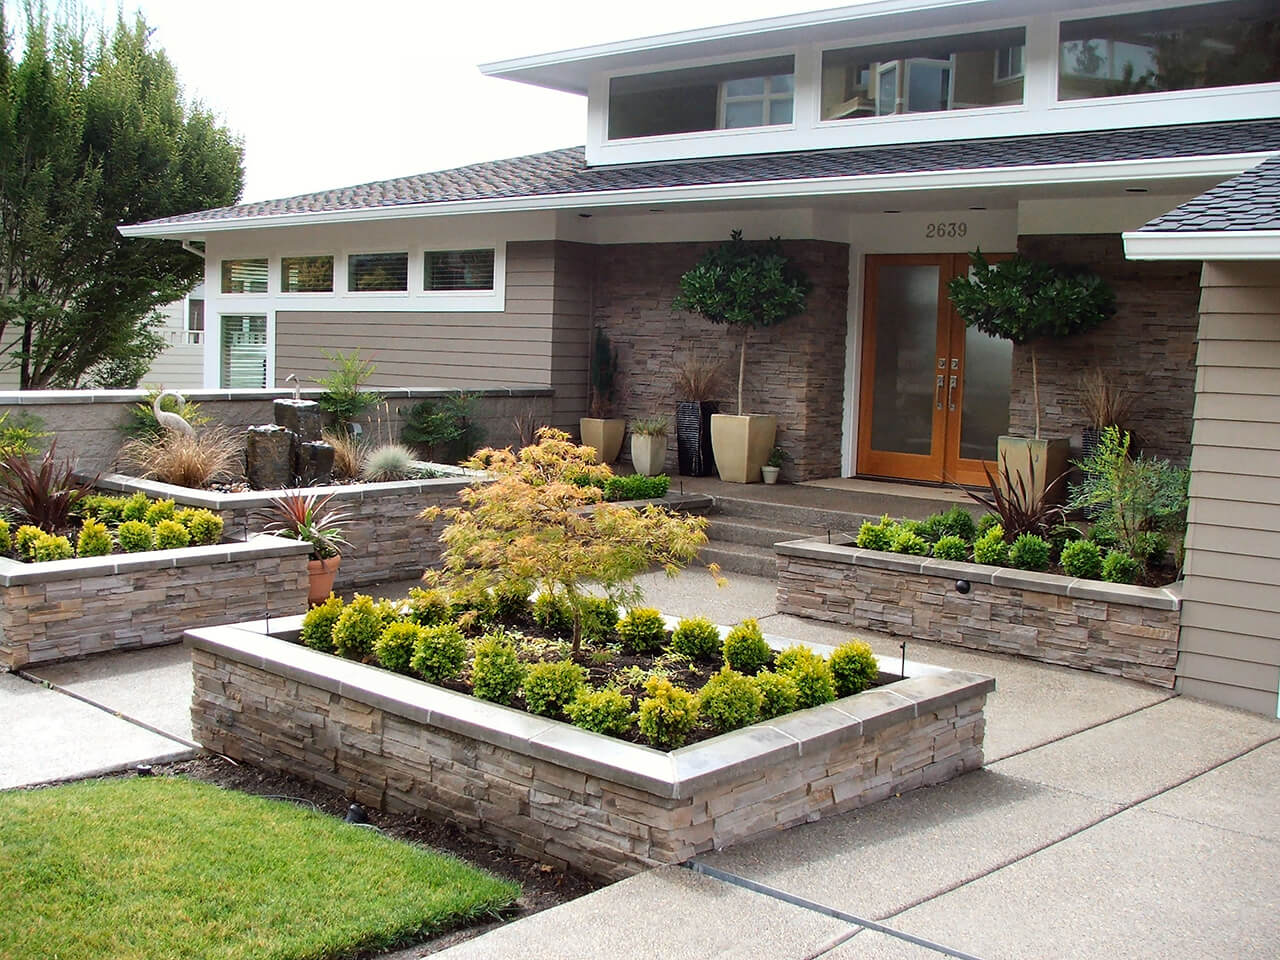 26 front yard landscaping garden ideas homebnc.jpg